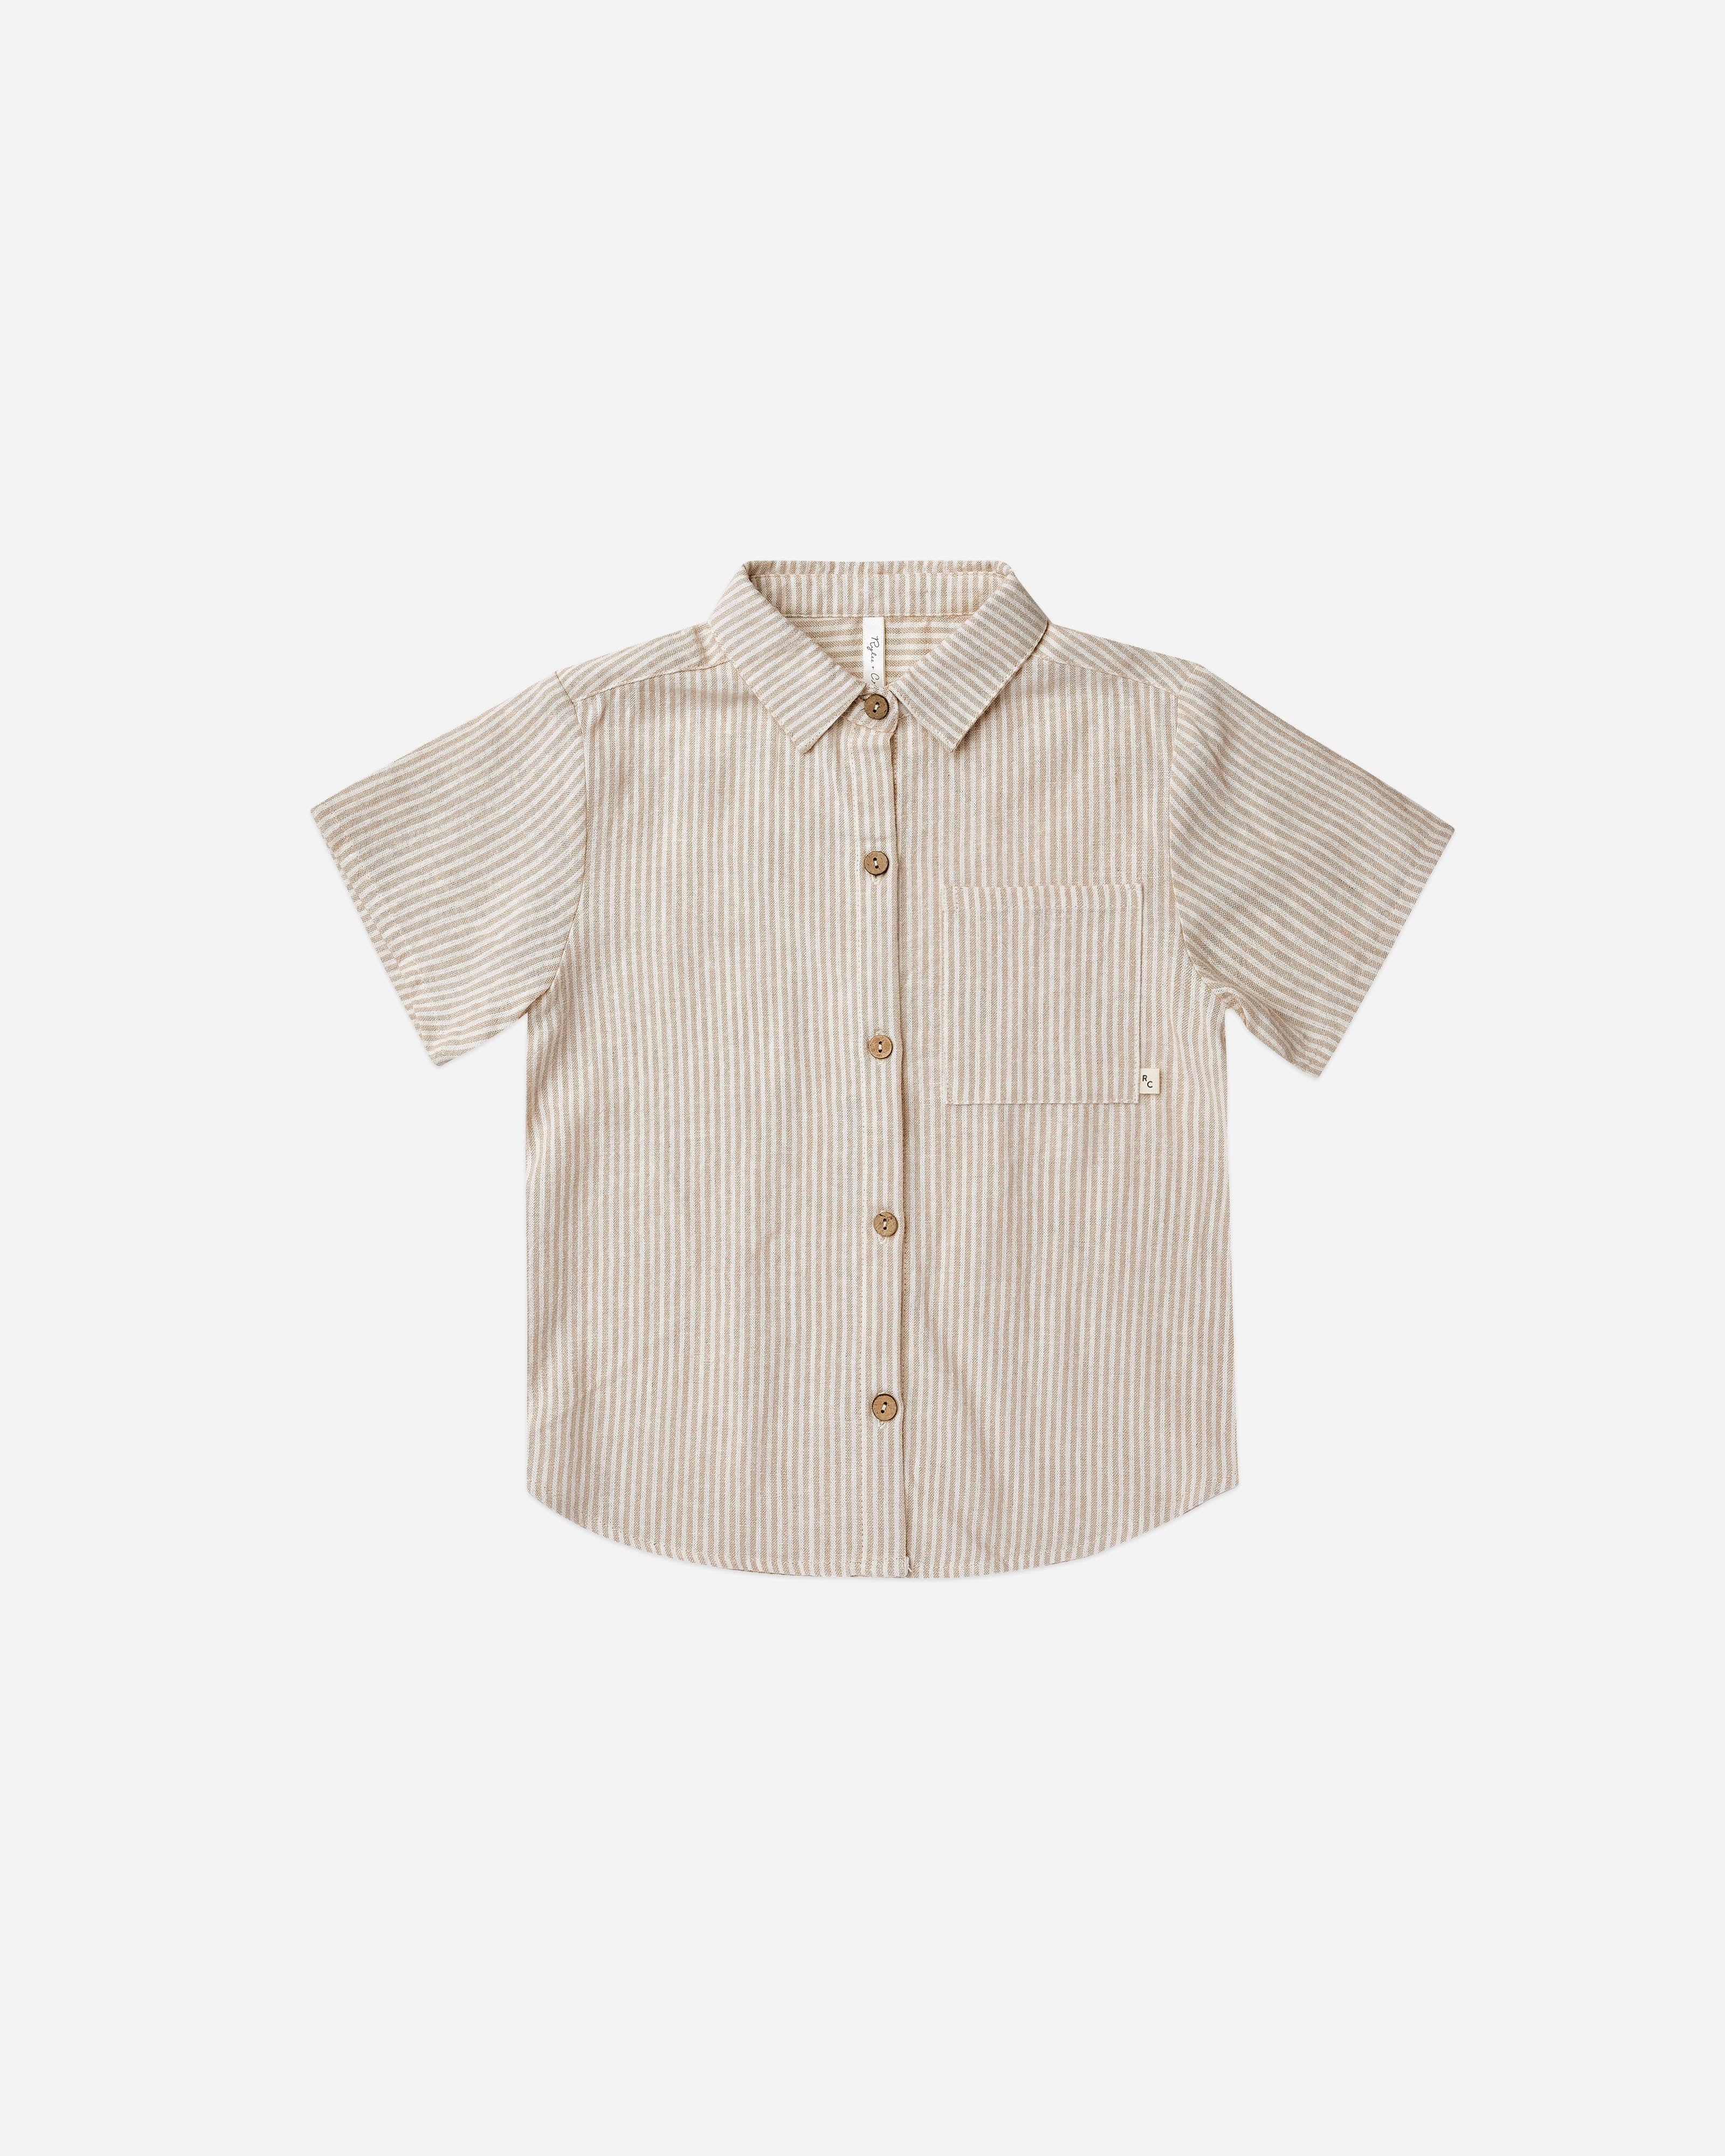 Collared Short Sleeve Shirt || Sand Stripe | Rylee + Cru